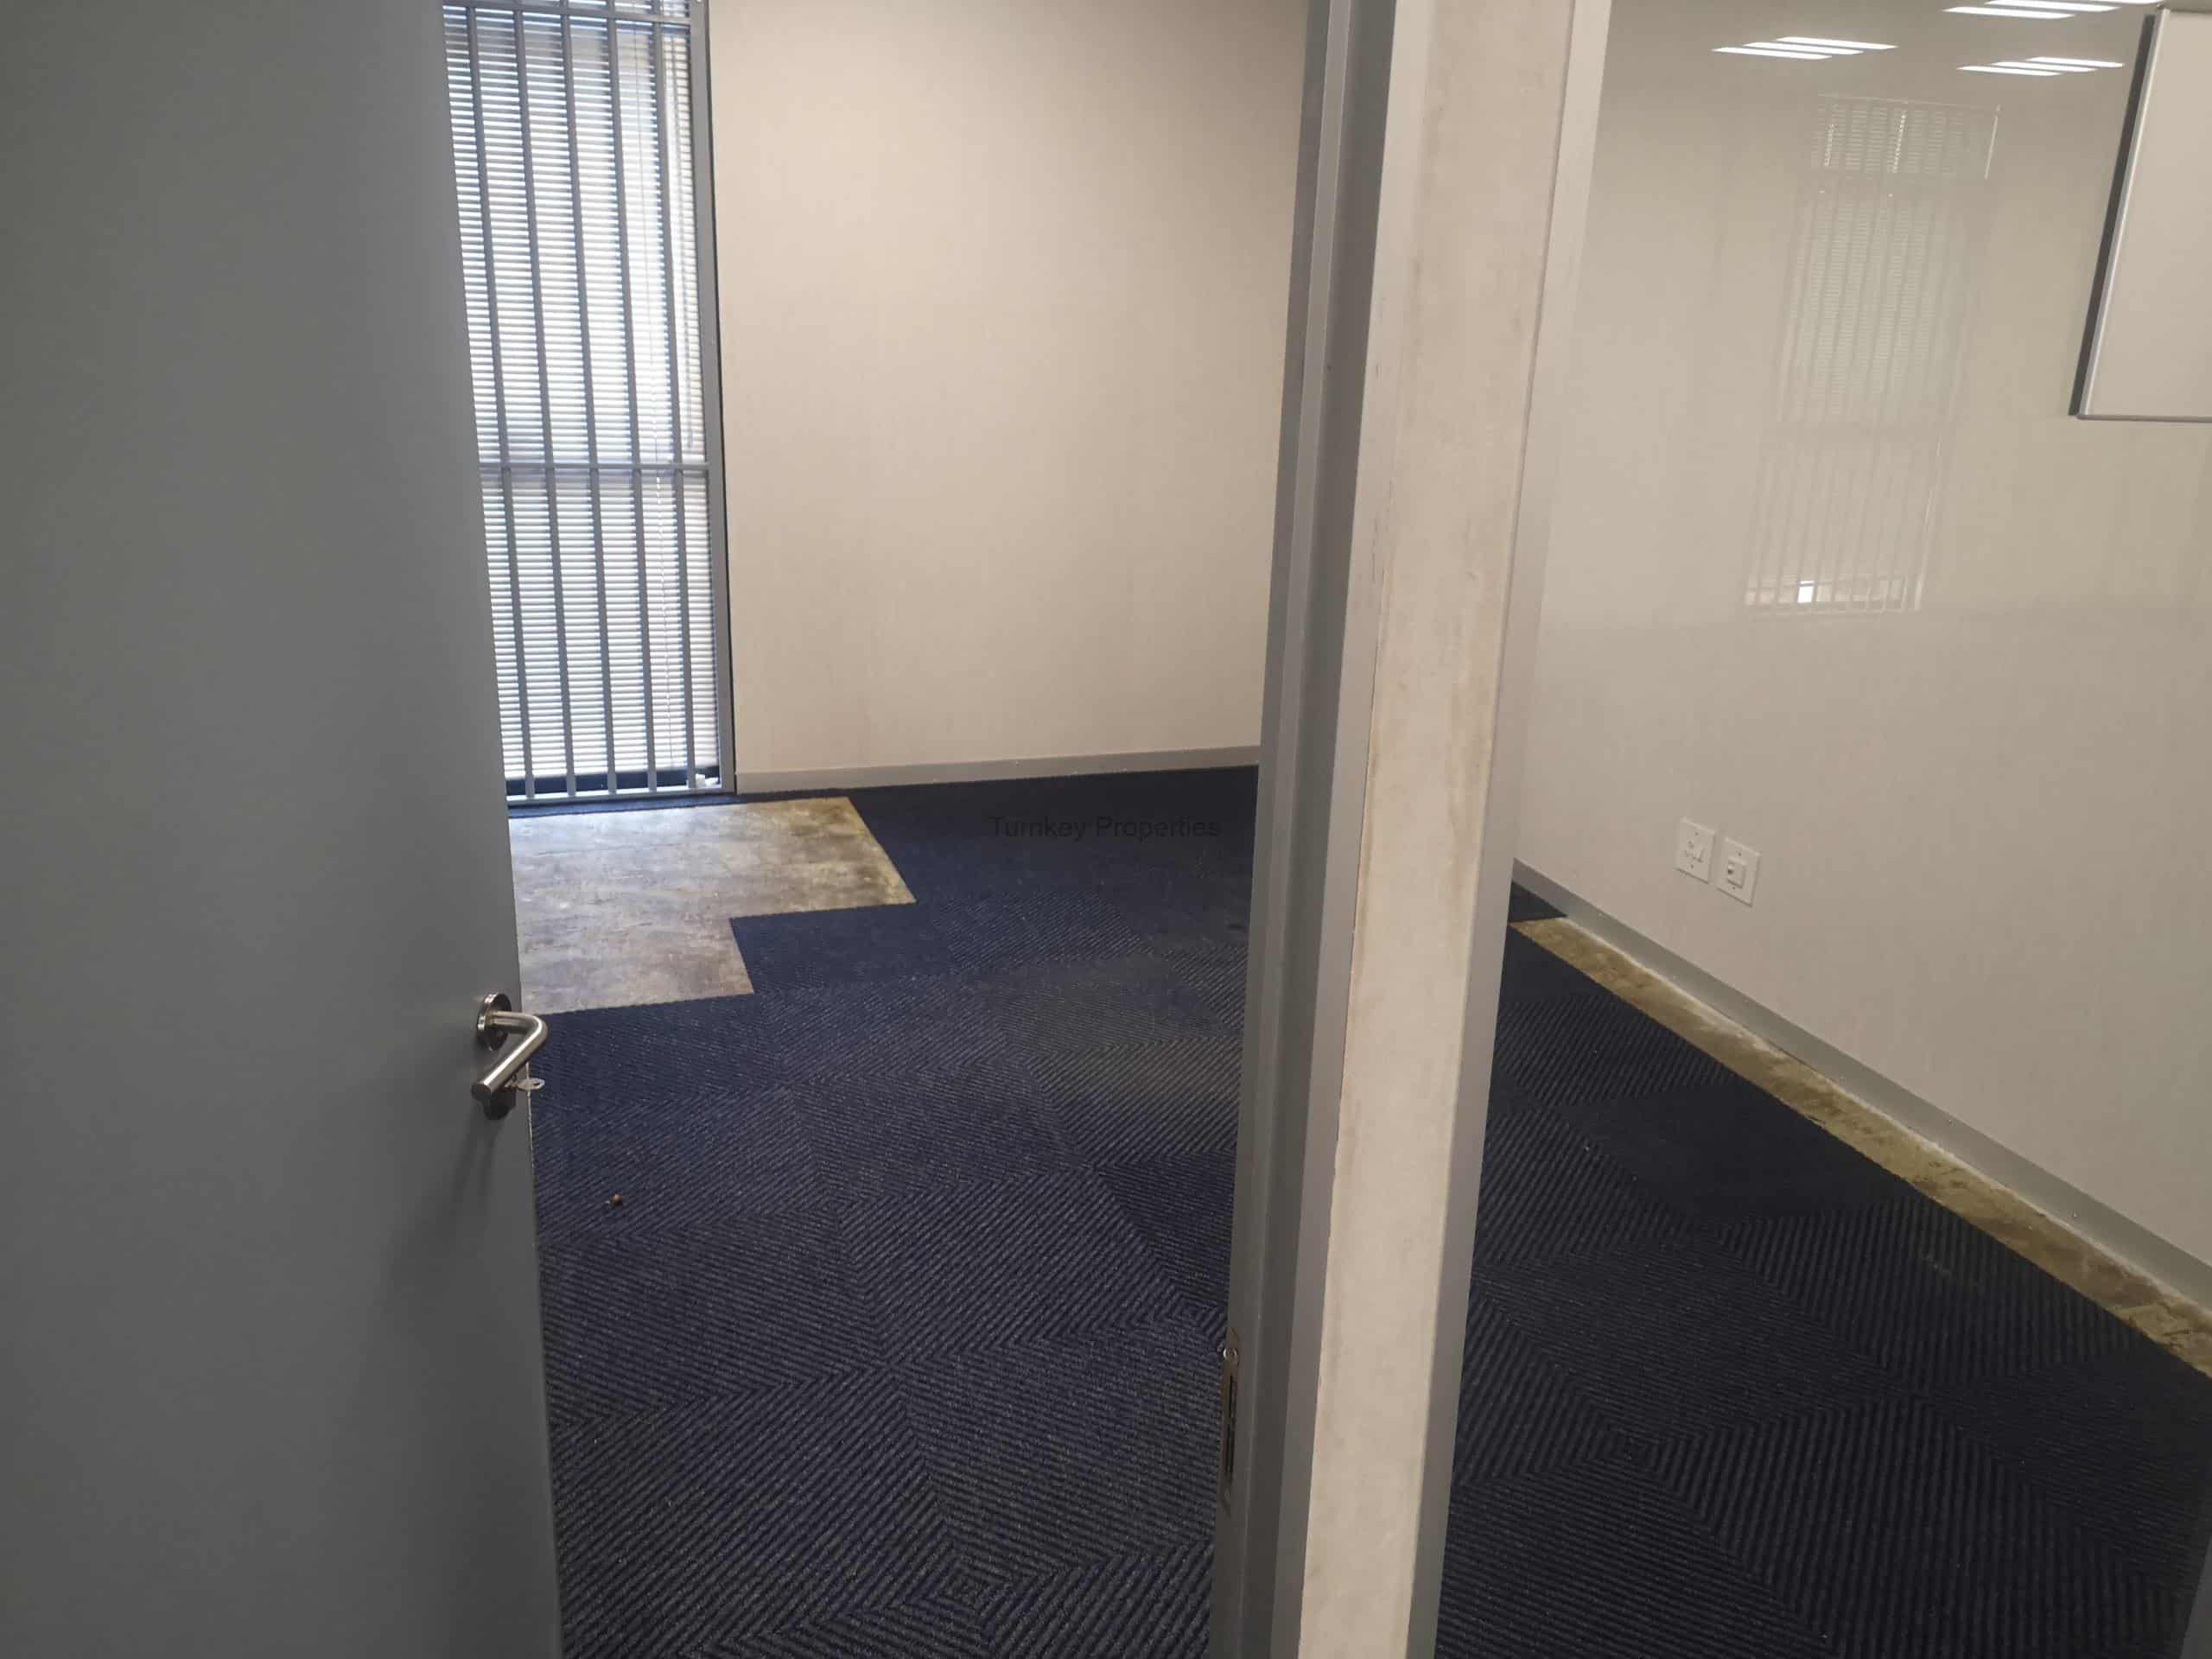 335m² Office Space to Rent Rosebank 6 Sturdee